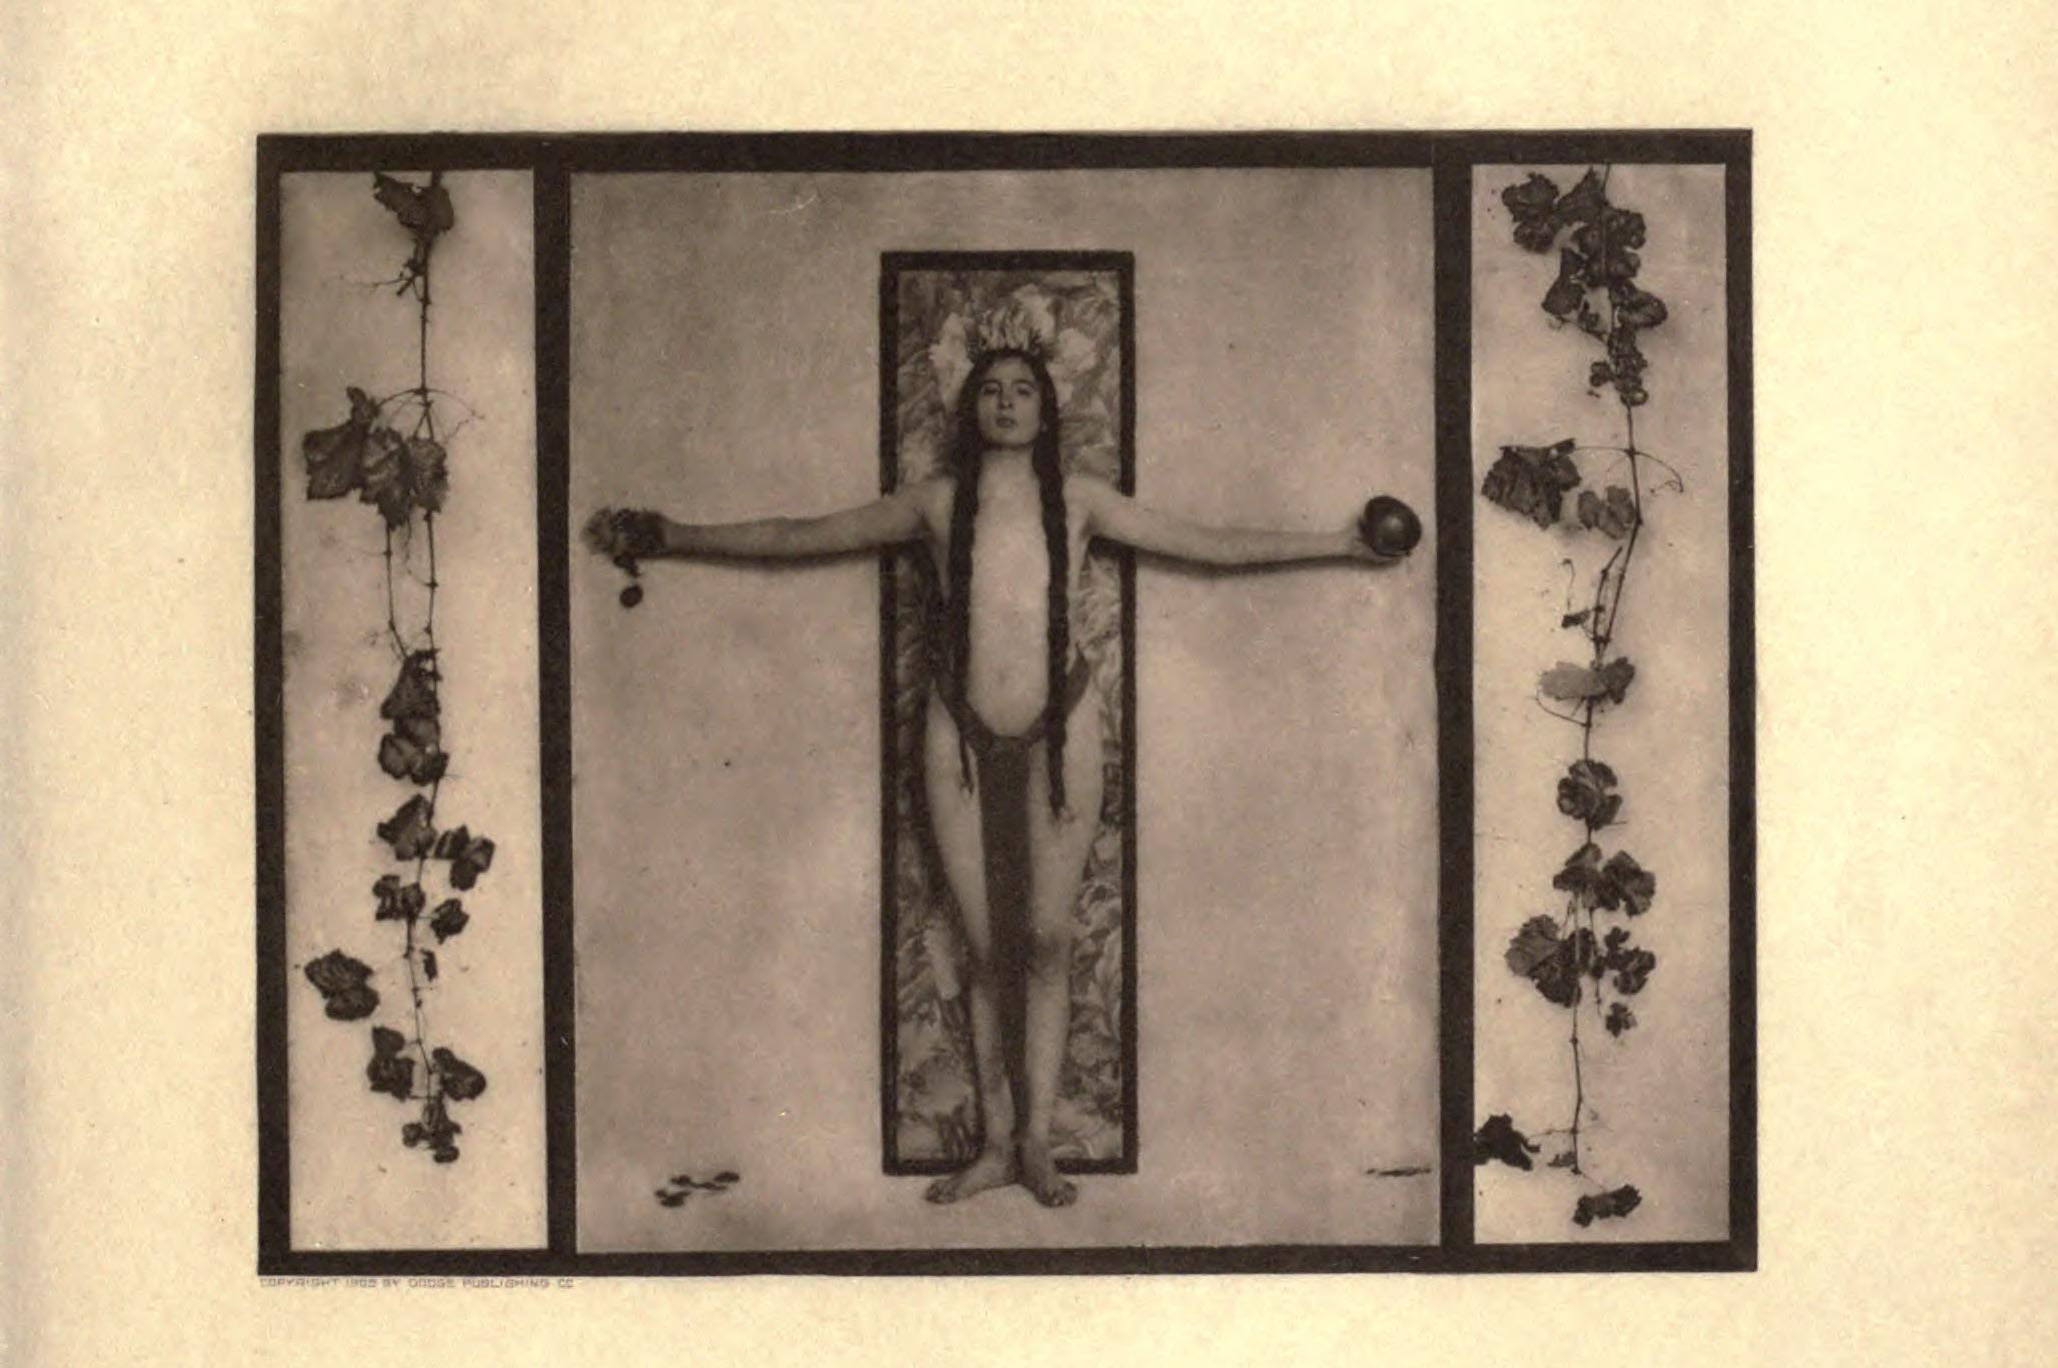 Adelaide Hanscom Leeson :: Plate V. The Rubaiyát of Omar Kháyyám, 1905. Published by Dodge Publishing Co. | src internet archive